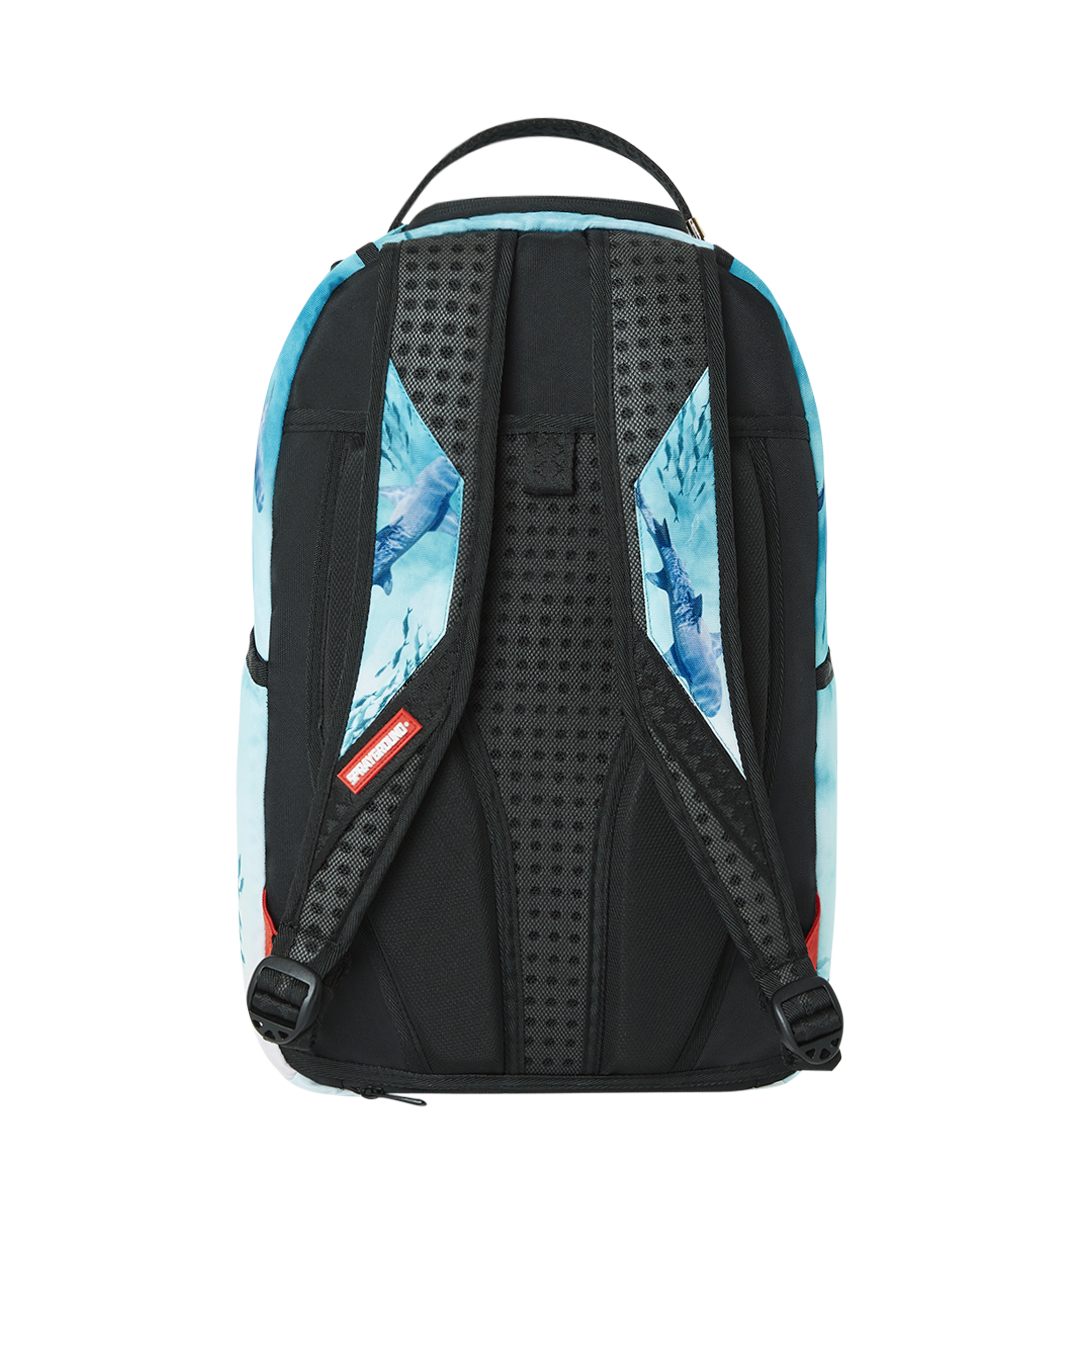 Sprayground smooth shark backpack